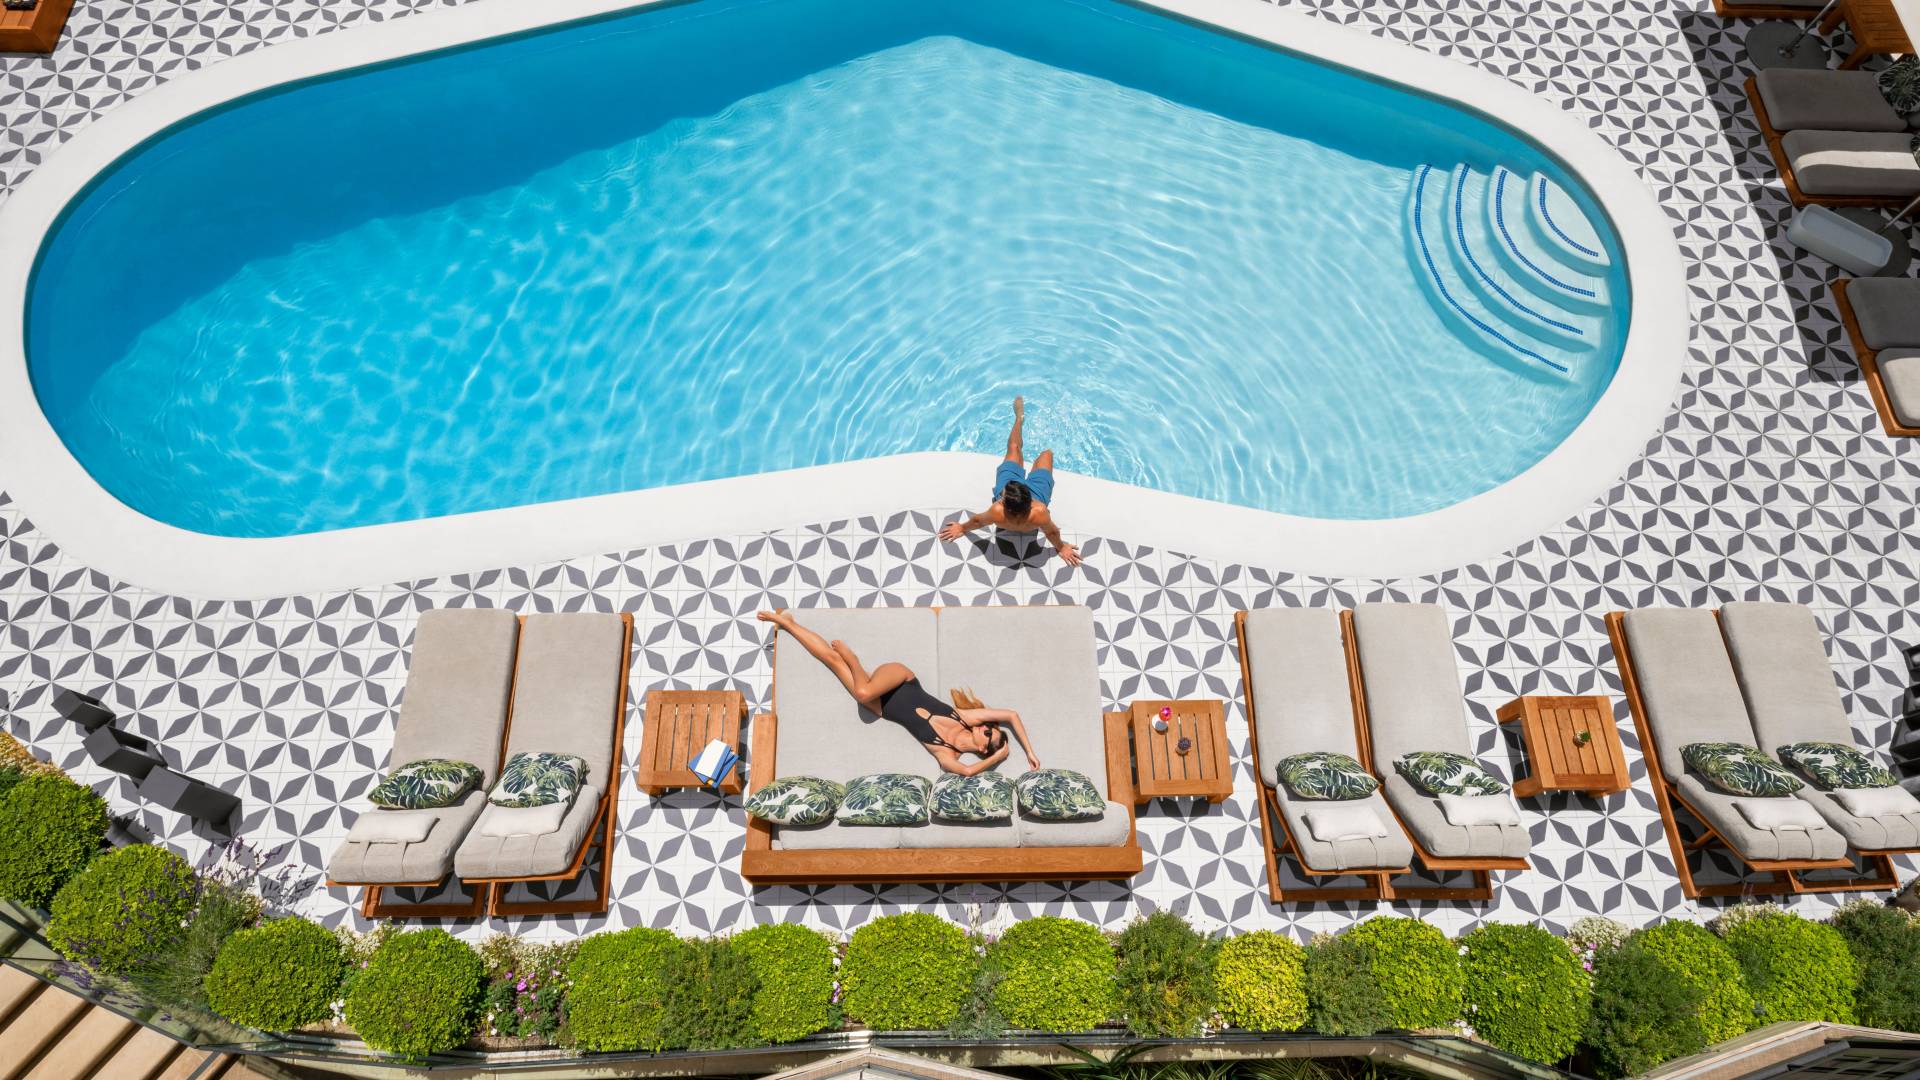 Wide aerial shot of woman sunbathing by pool with man sitting in pool